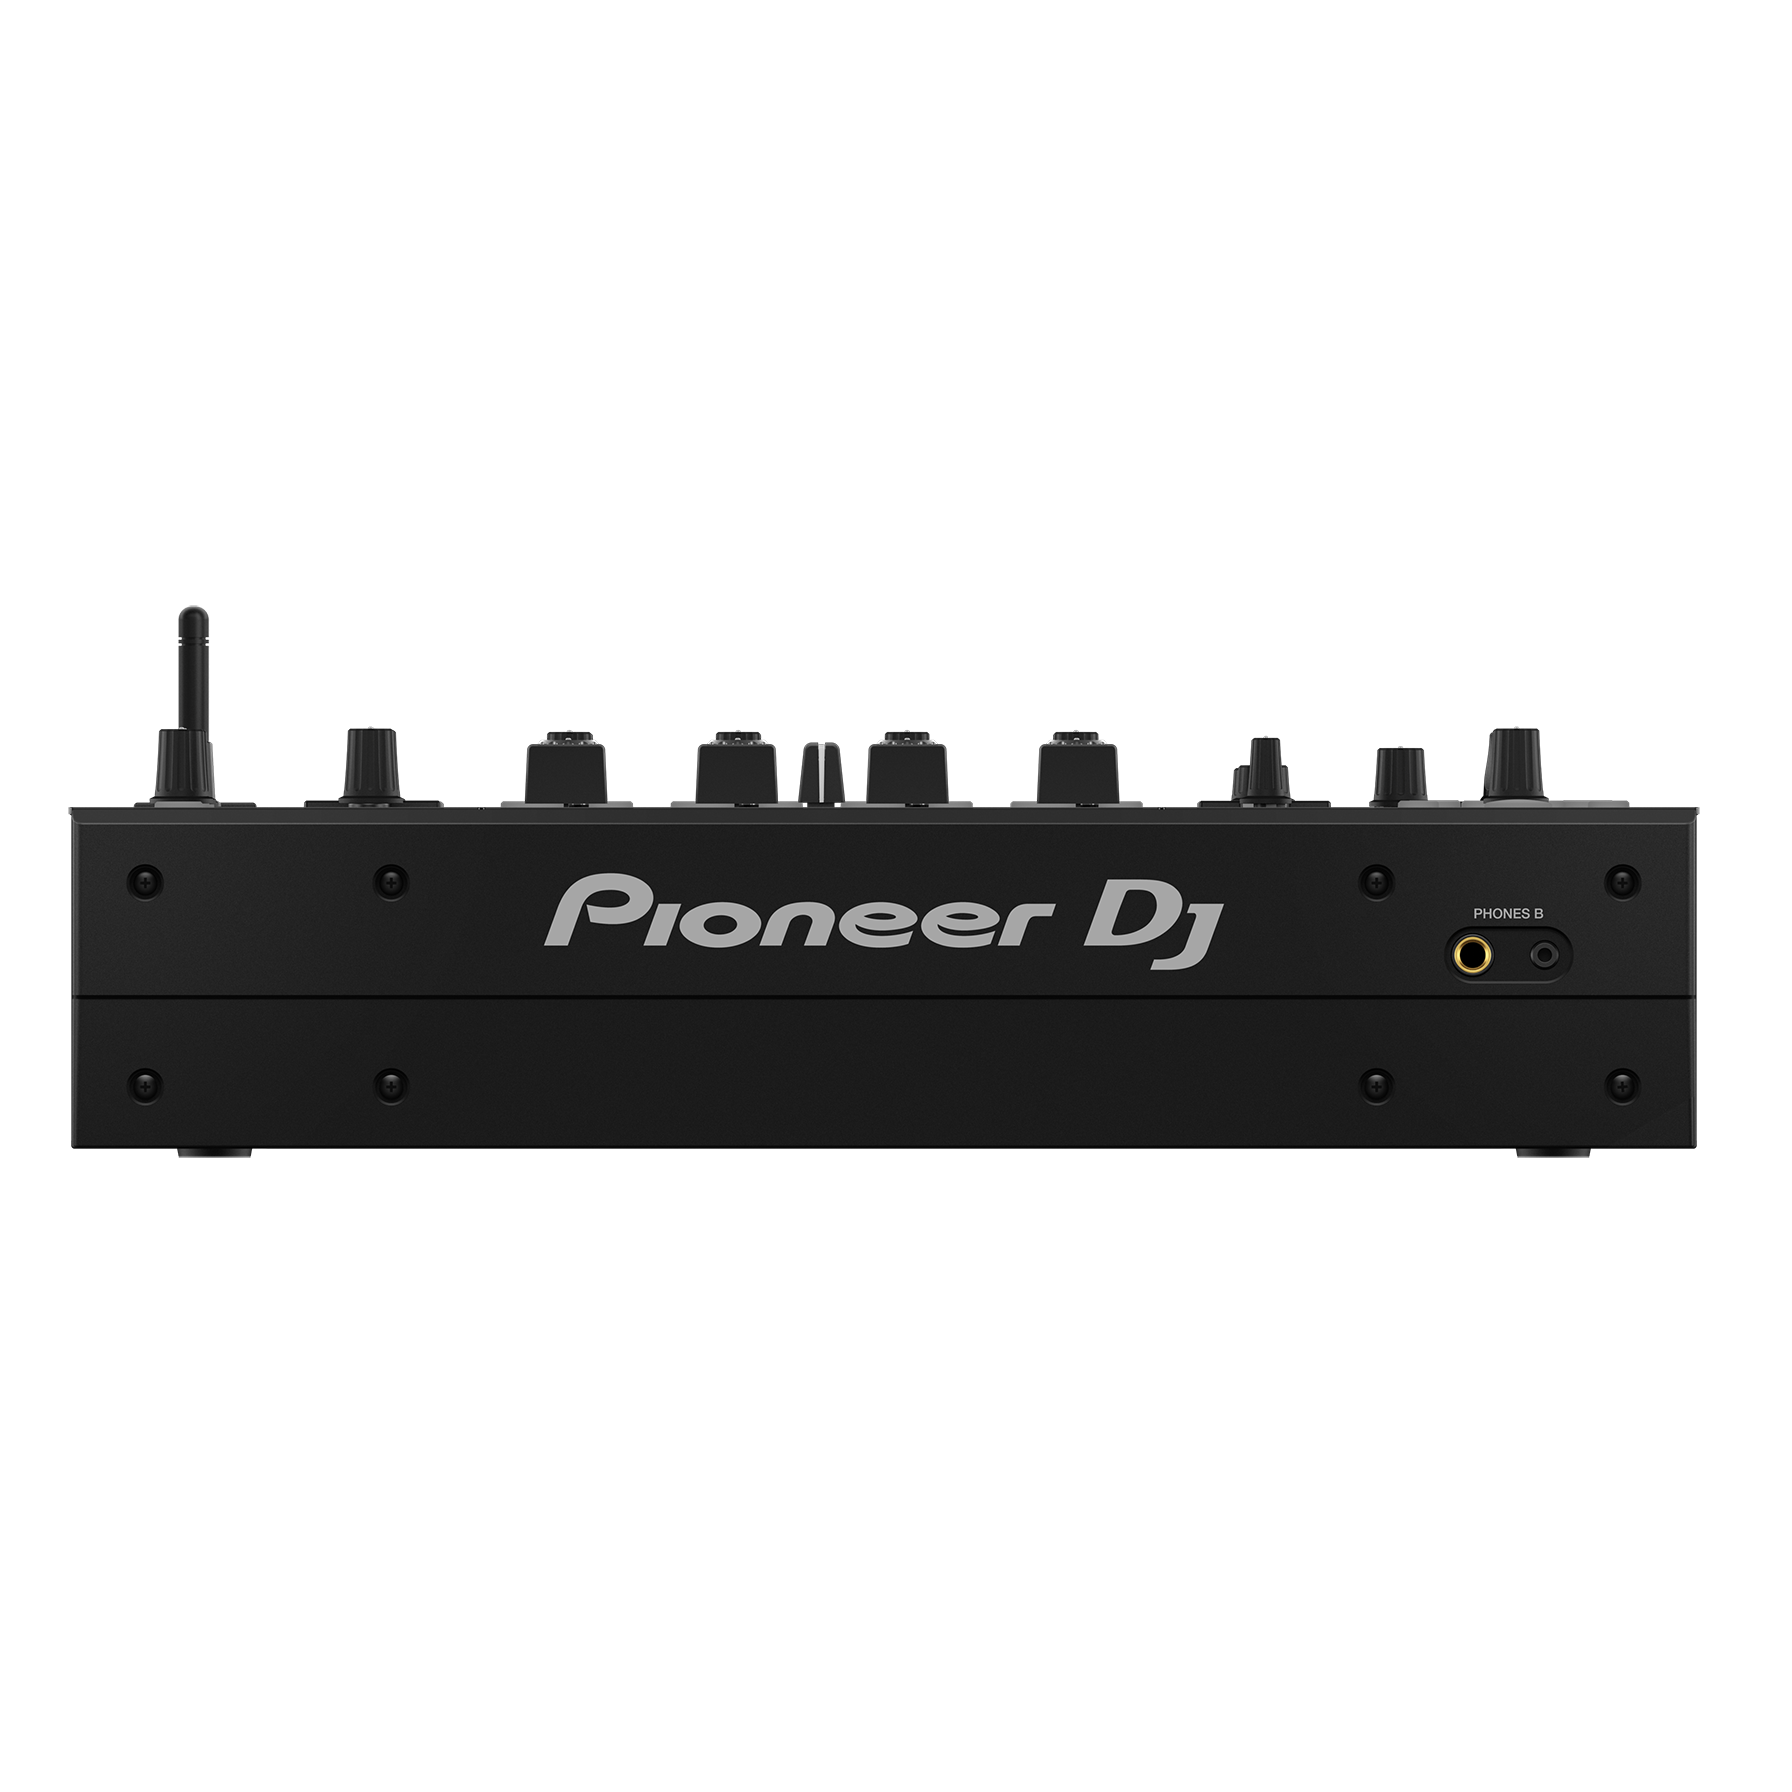 Pioneer DJ Raises the Bar with its Next Generation DJM-A9 DJ Mixer